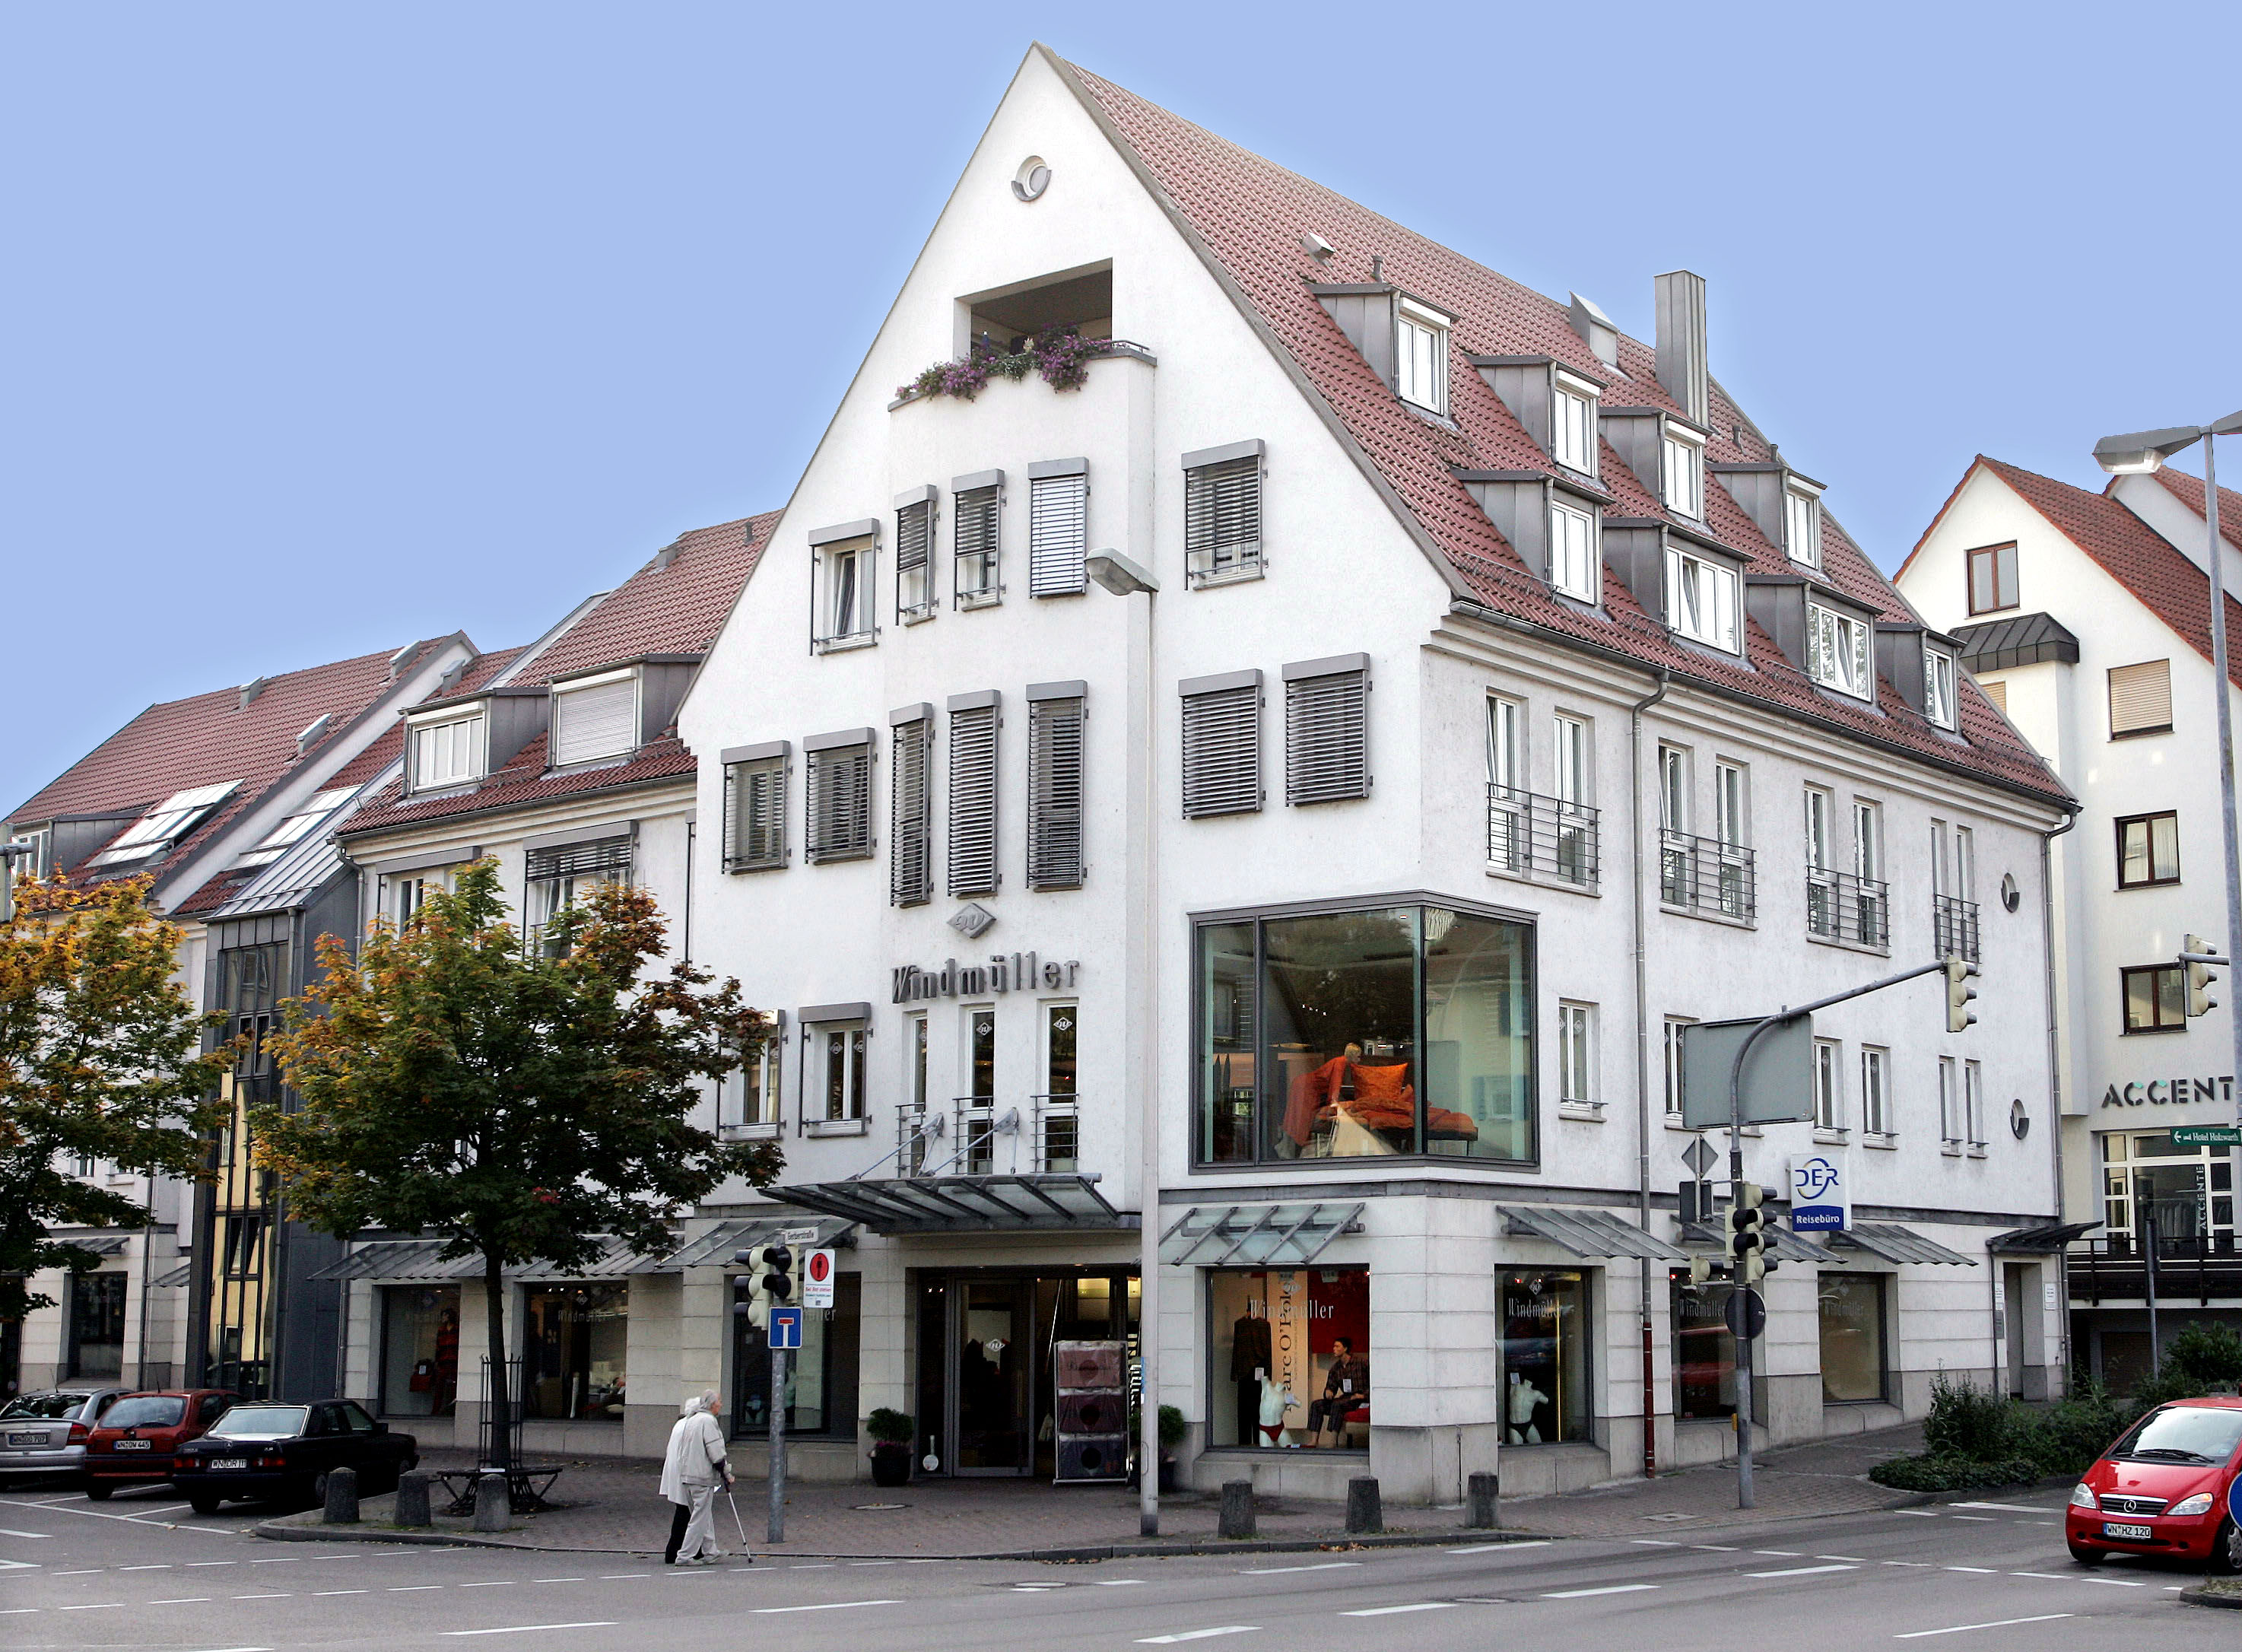 Bild 2 Betten- und Wäschehaus Windmüller in Backnang